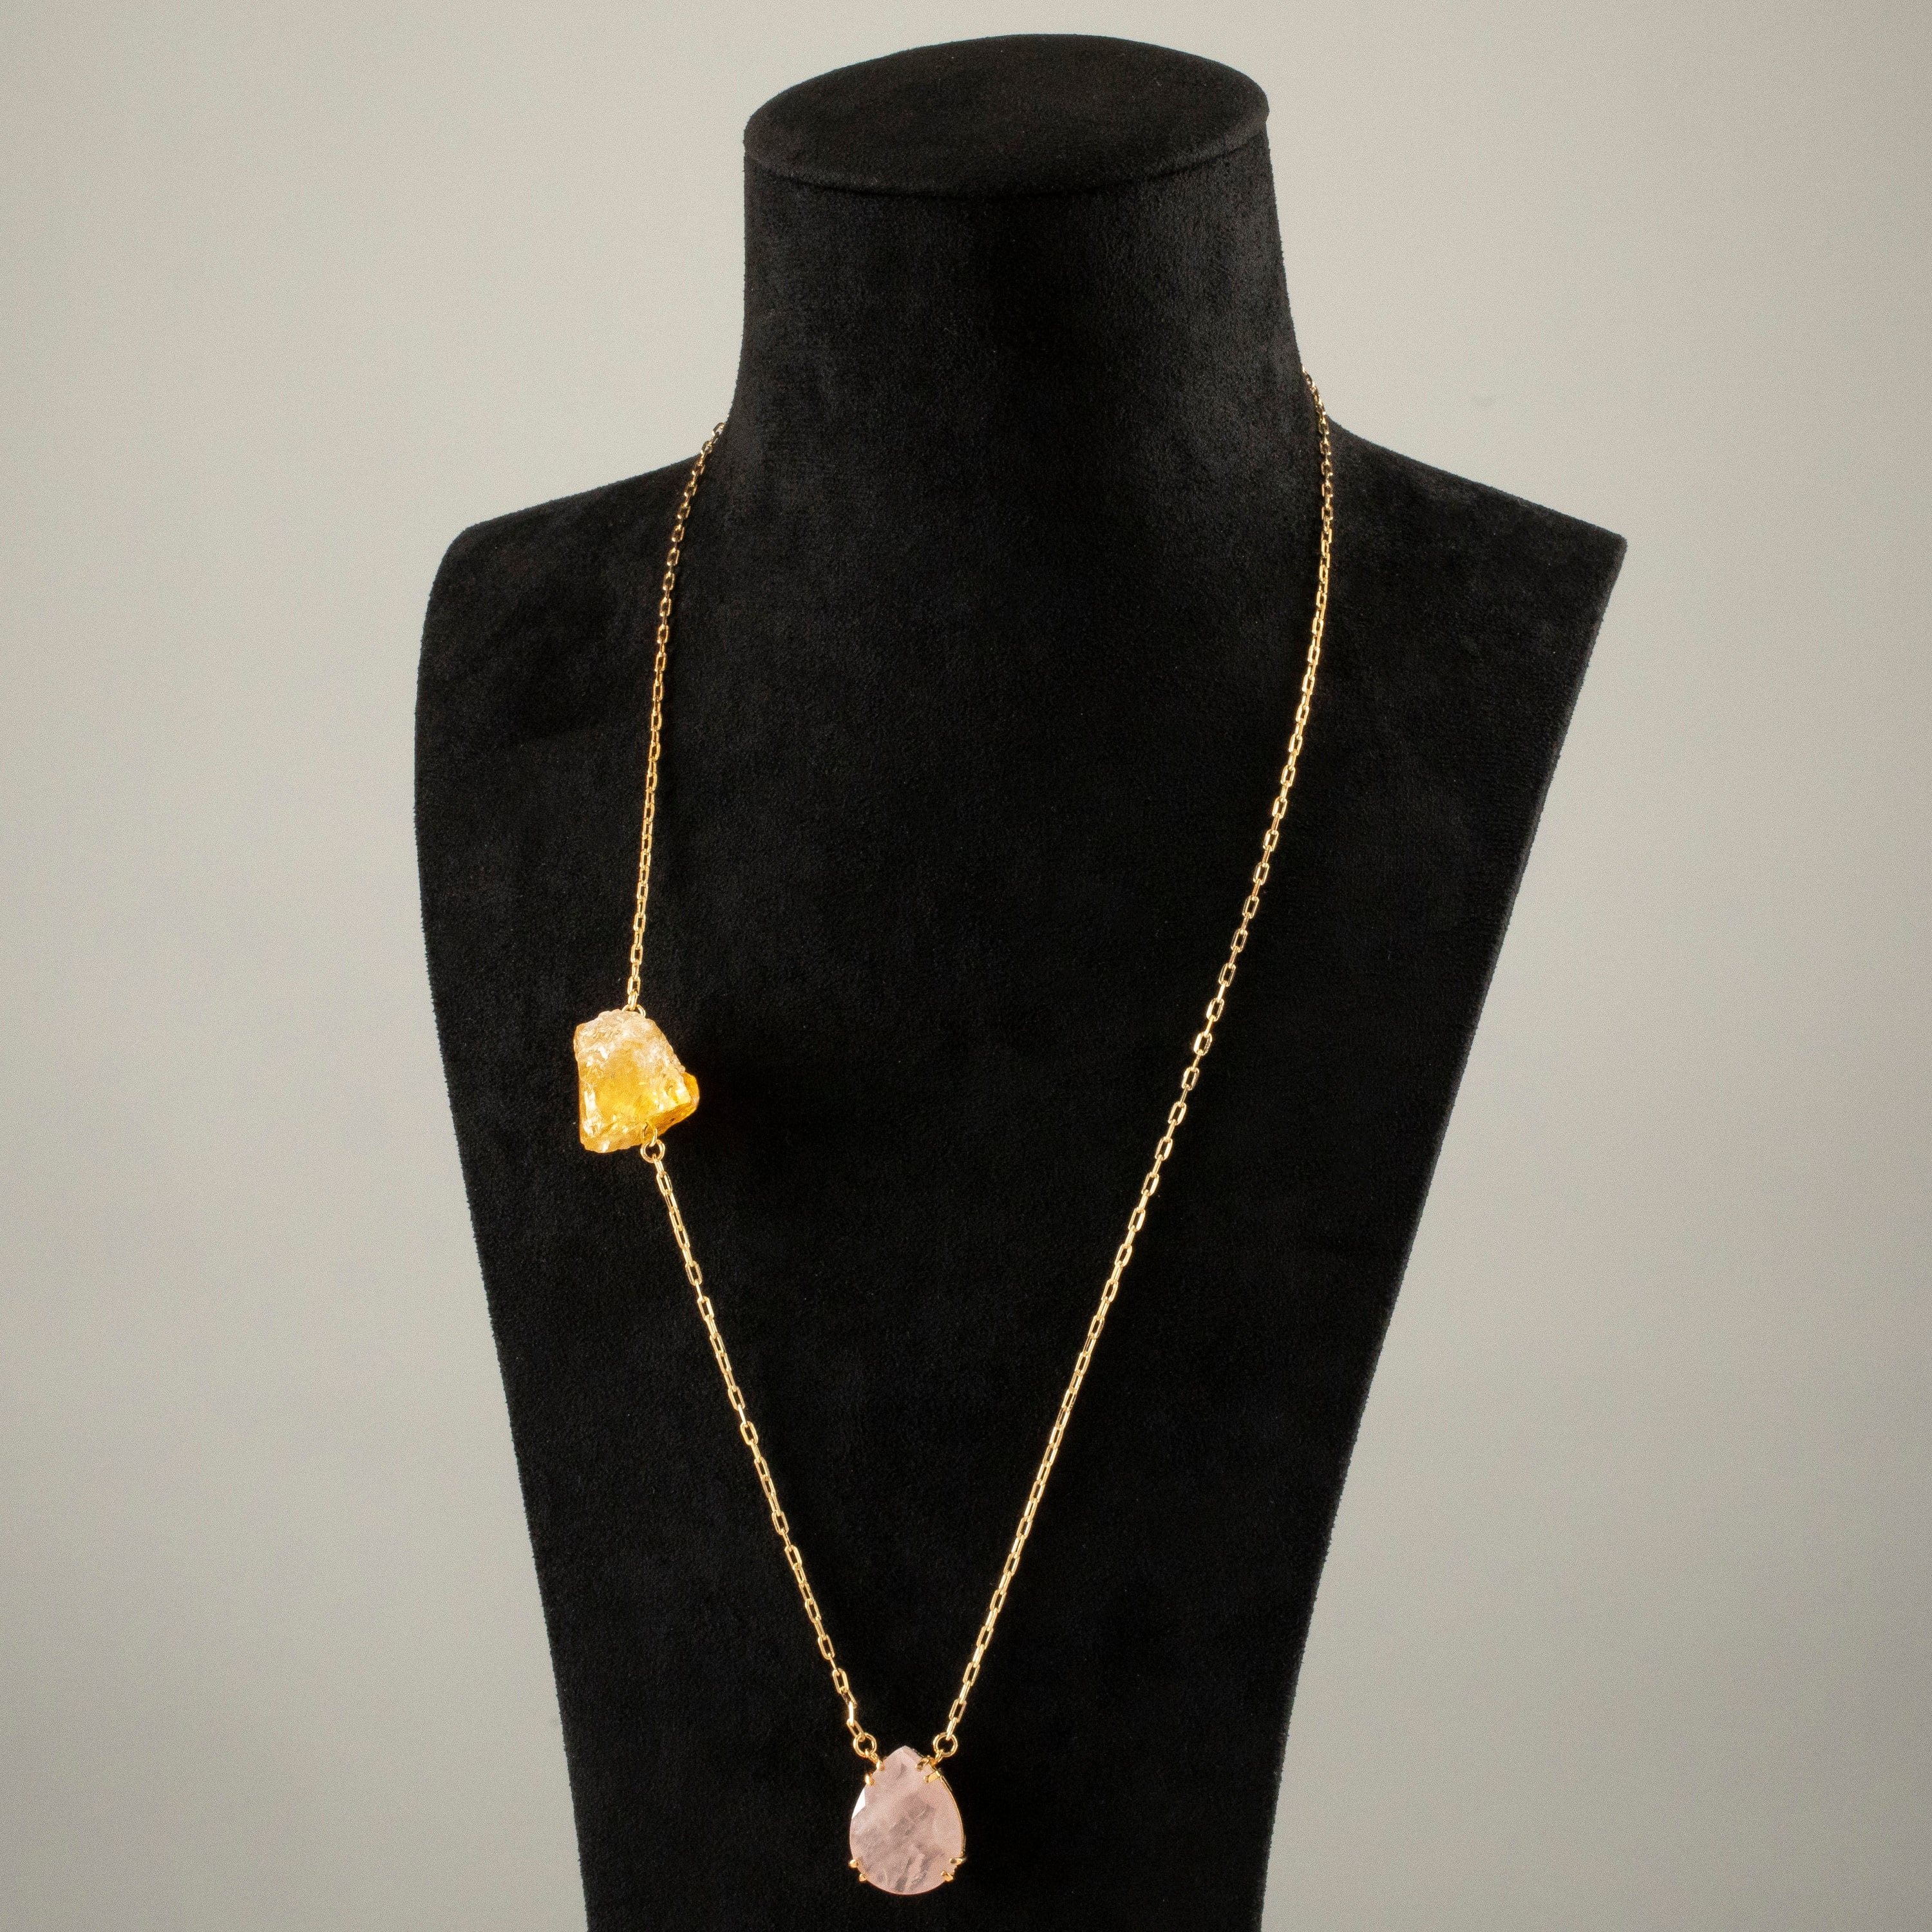 KALIFANO Crystal Jewelry Rose Quartz & Citrine Drop Necklace CJN-2067-RQ+CT